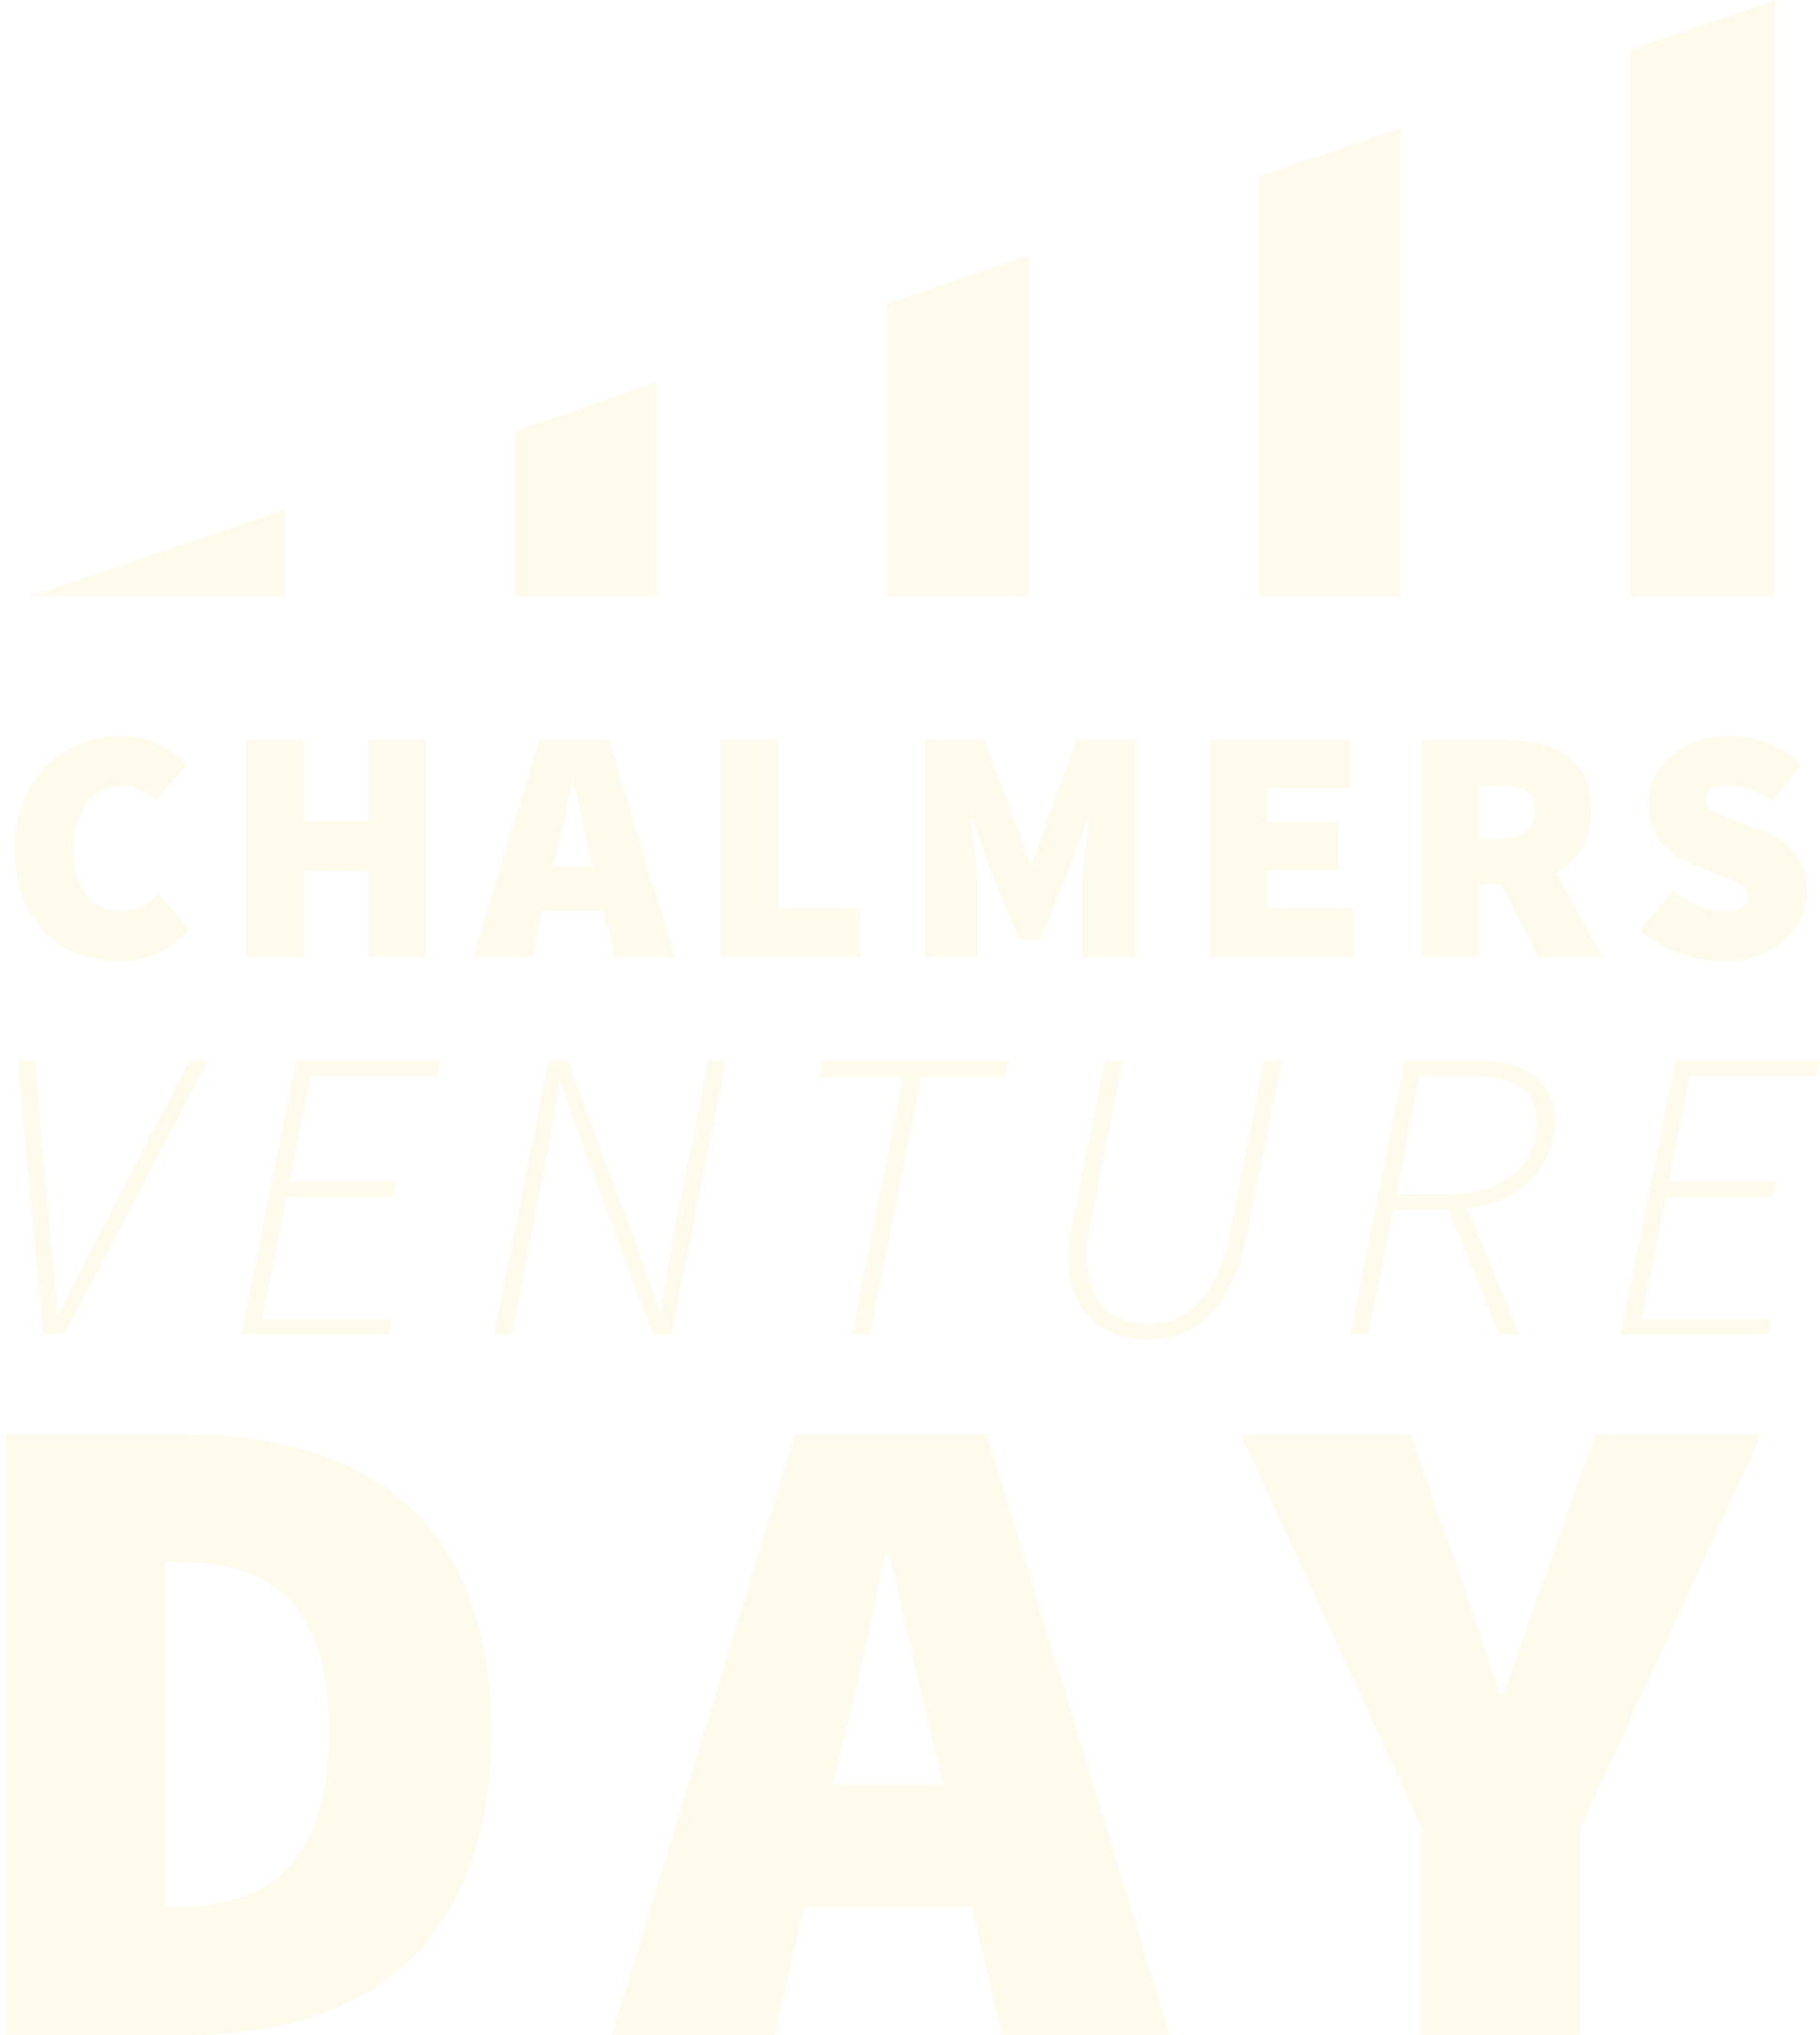 2022-Chalmers-Venture-Day-logo